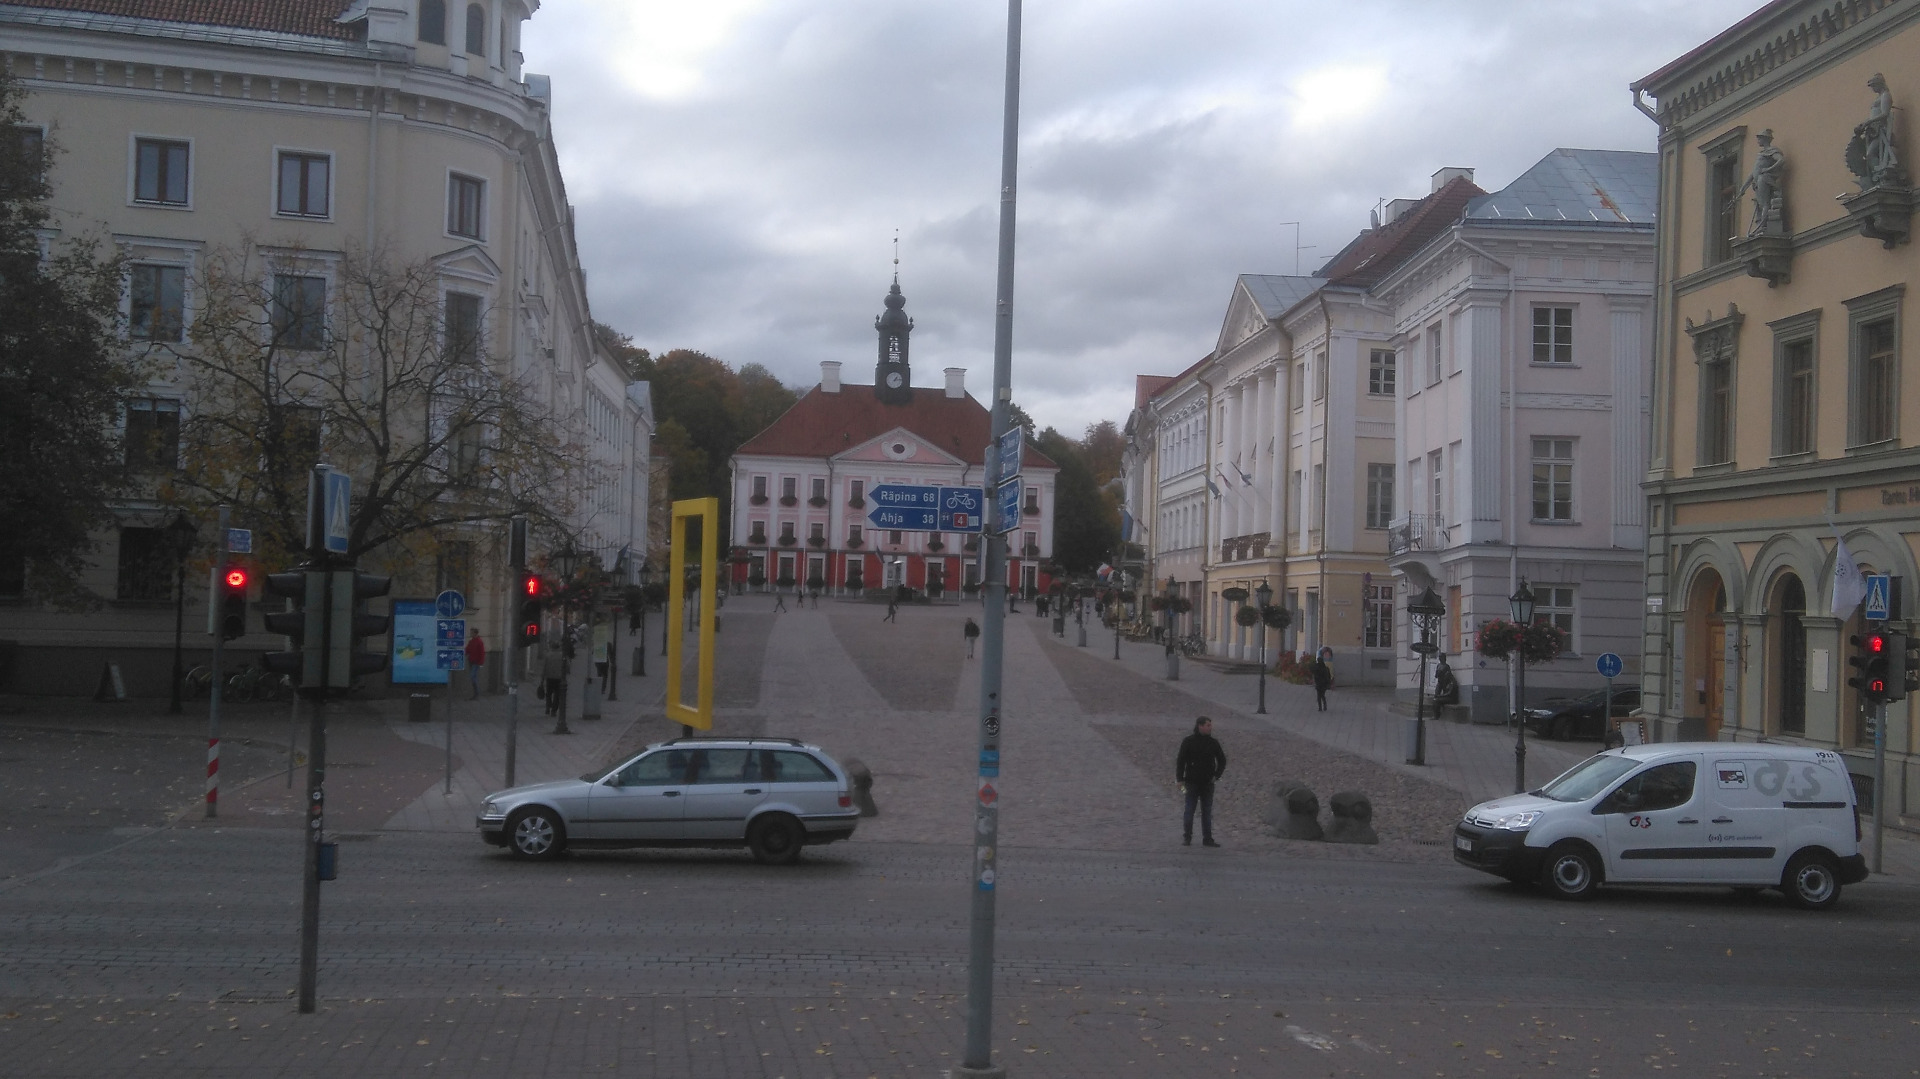 Film "Tartu city and surroundings" 0:01:51.570 rephoto